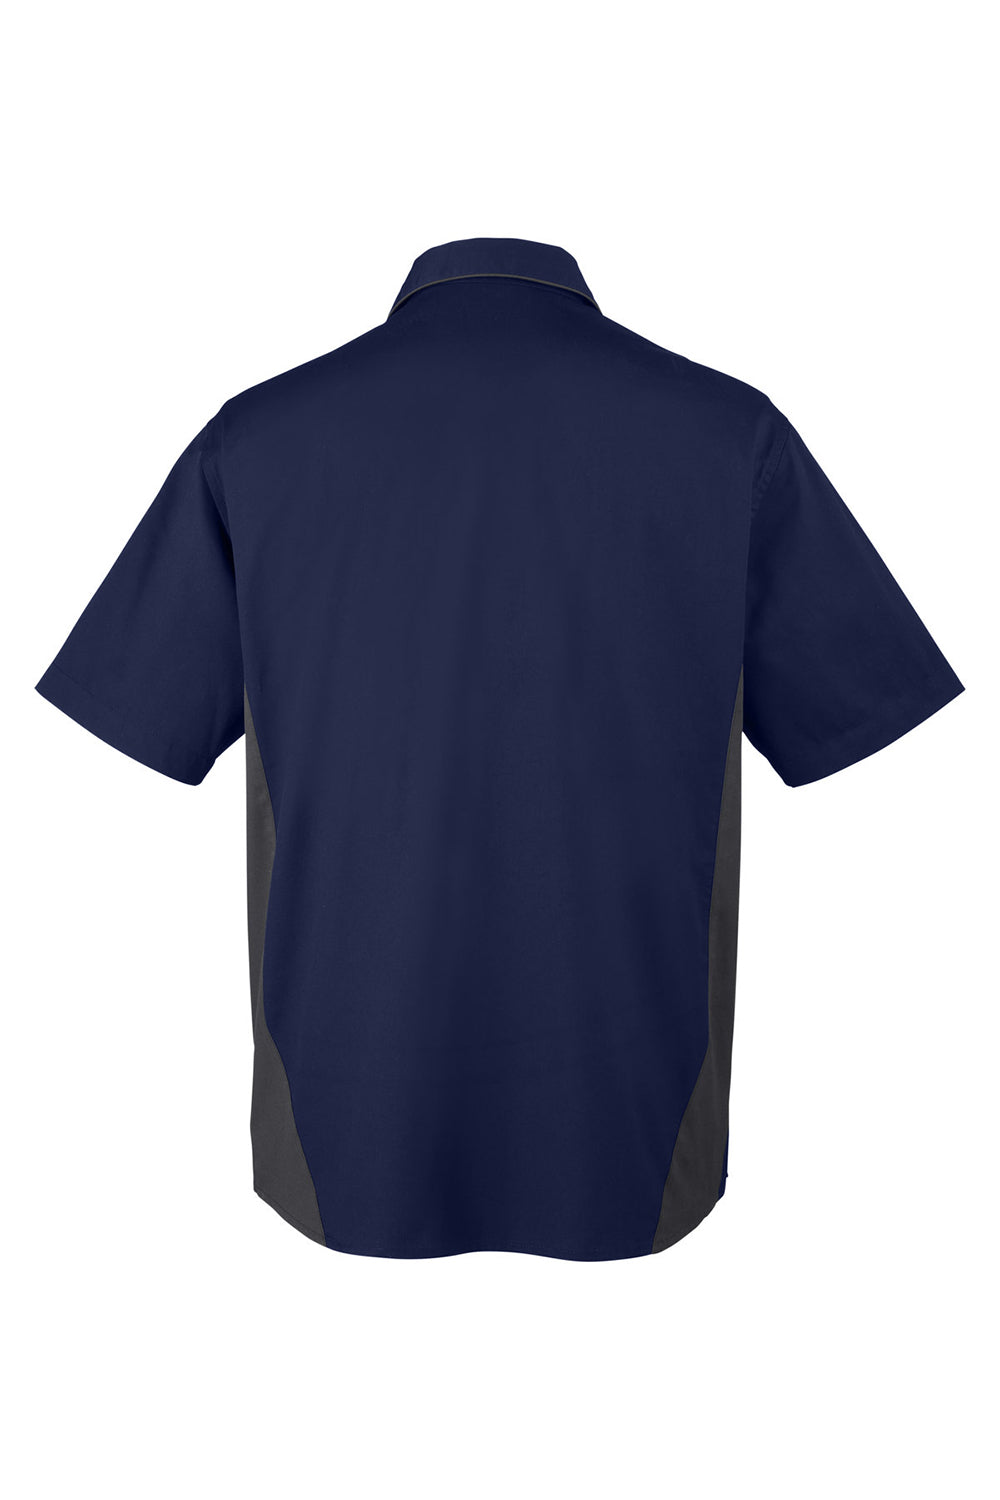 Harriton M586/M586T Mens Flash Colorblock Short Sleeve Button Down Shirt w/ Pocket Dark Navy Blue/Dark Charcoal Grey Flat Back